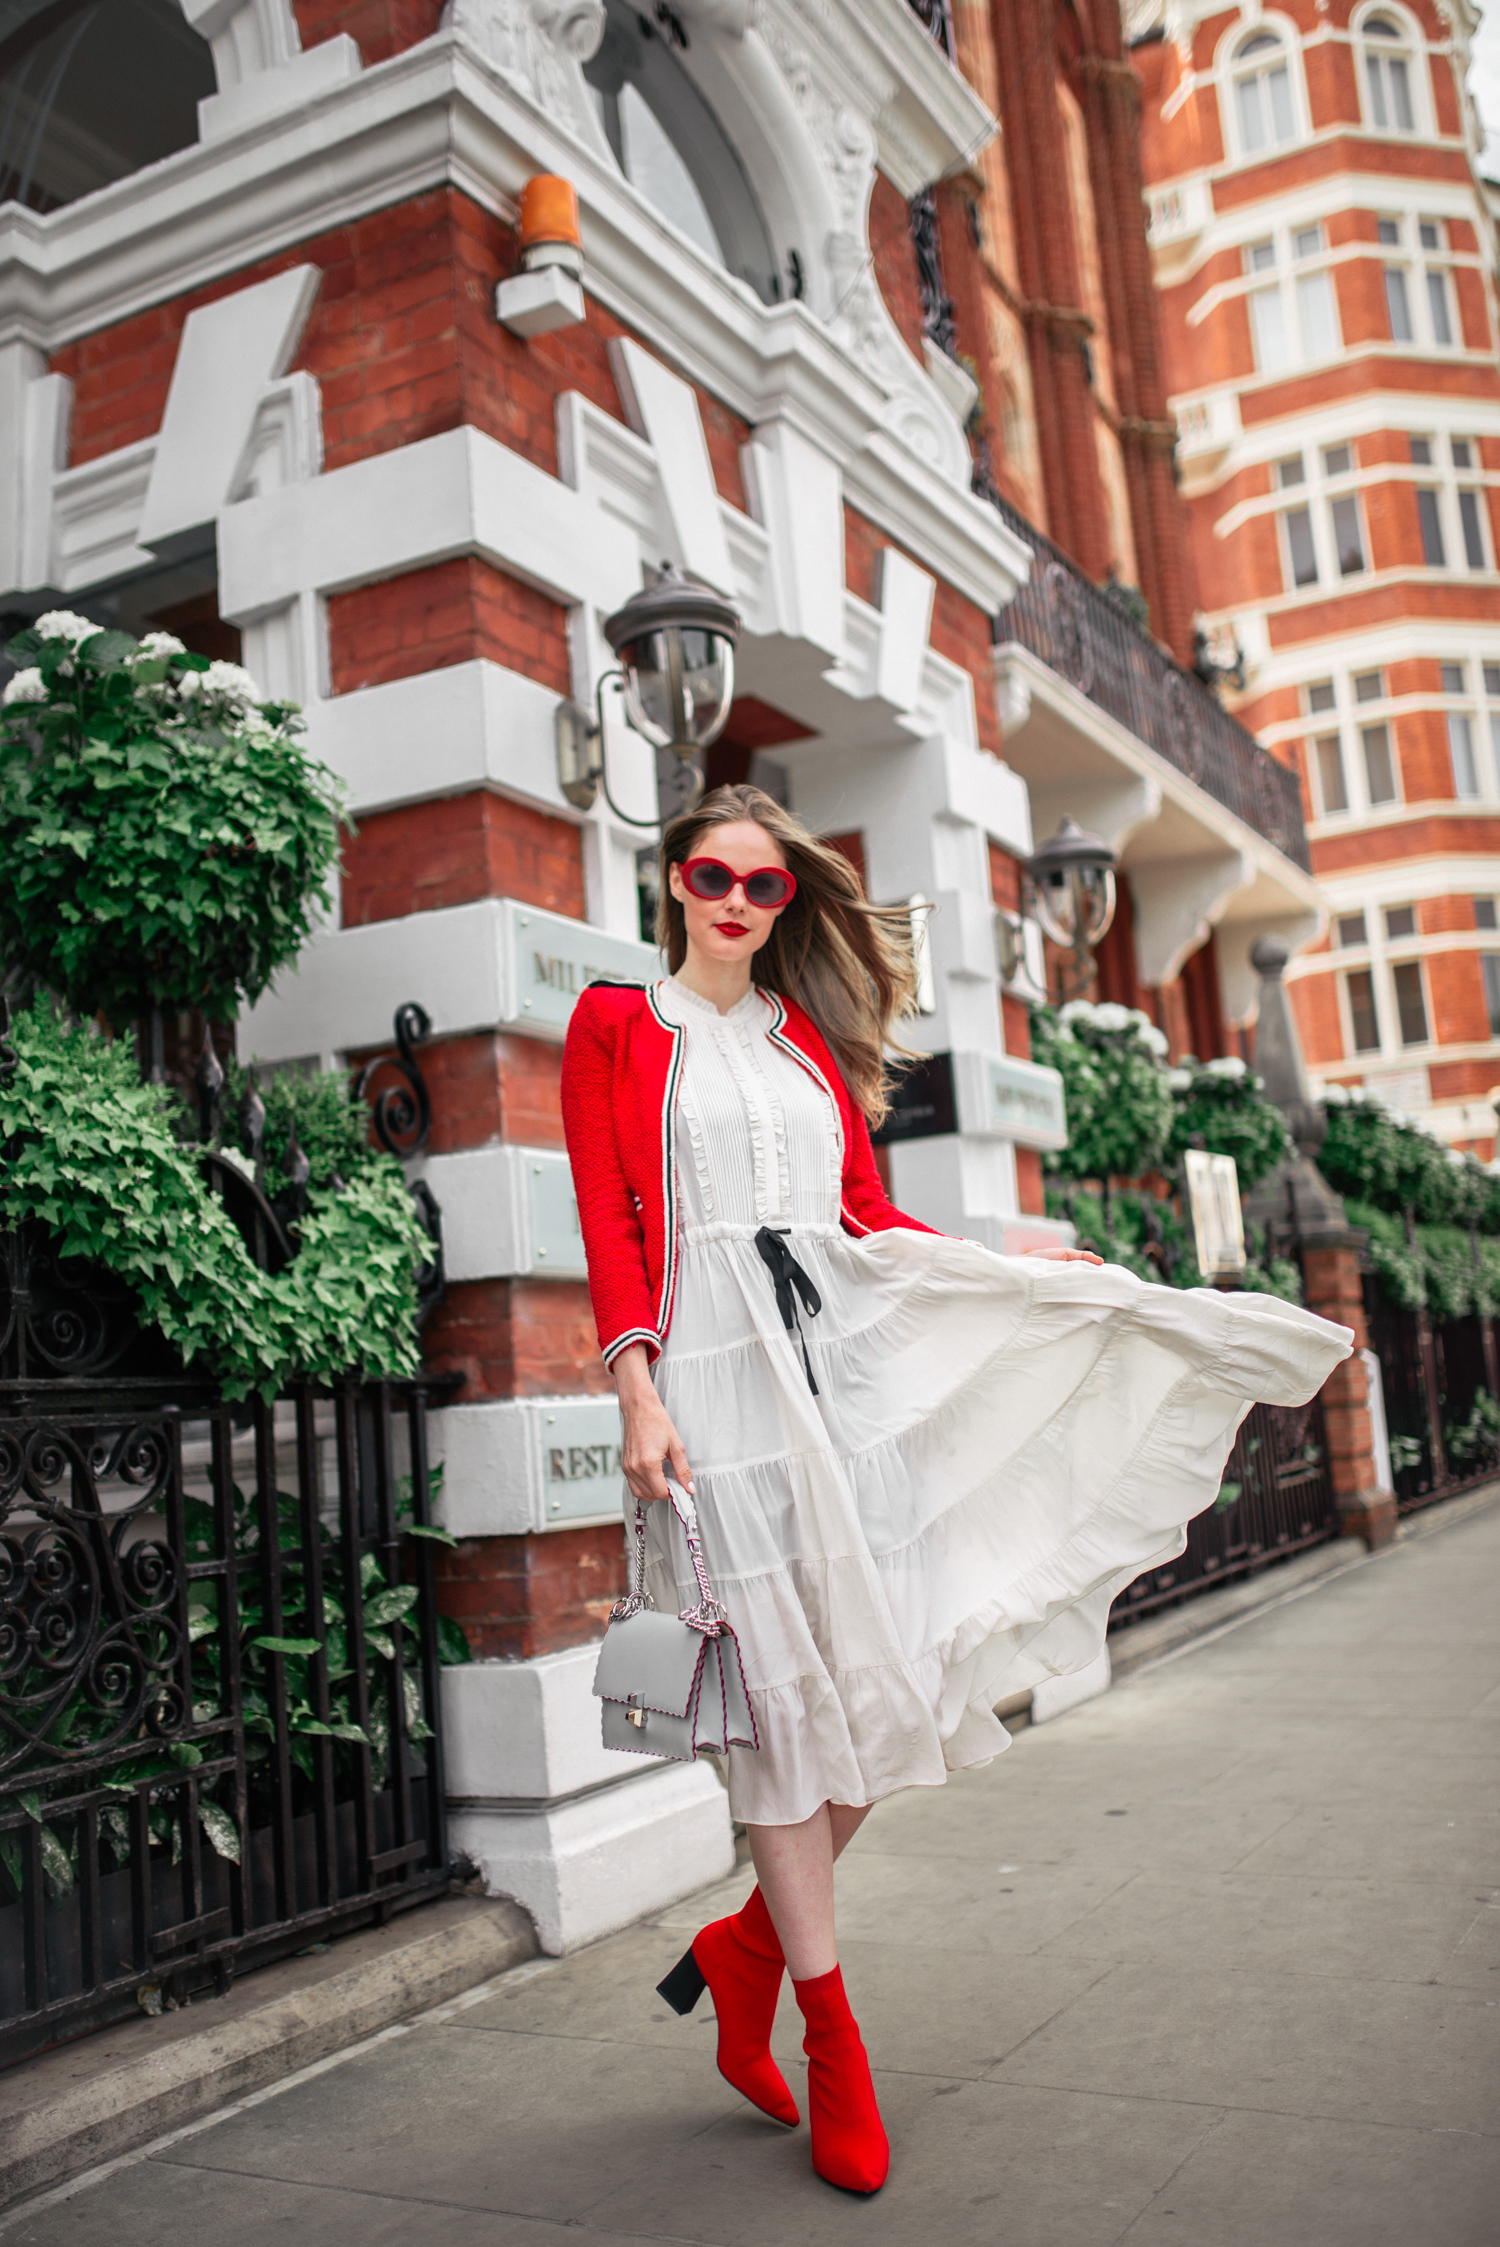 Alyssa Campanella of The A List blog experiences luxury in London at the Milestone hotel wearing The Kooples jacket, Ulla Johnson dress, and Fendi Kan I bag